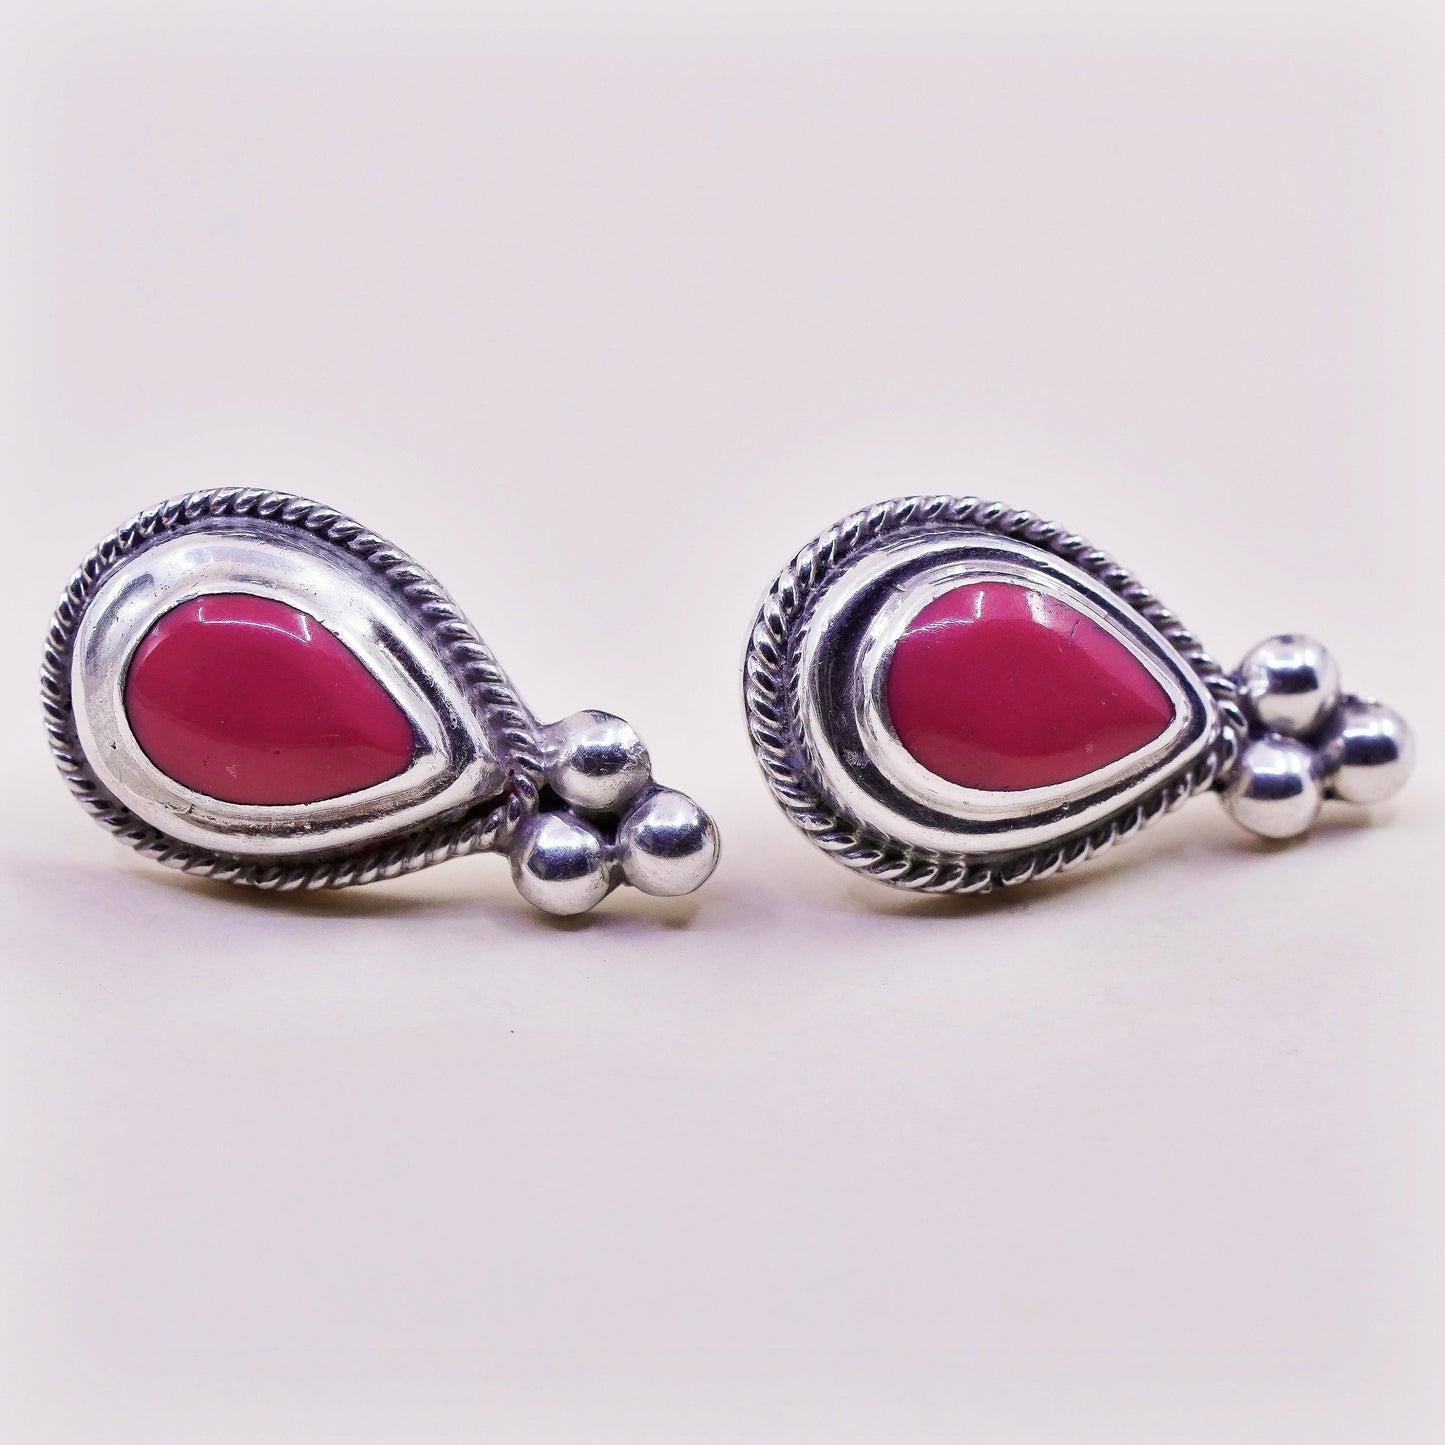 vintage Mexico handmade Sterling silver studs, 925 teardrop earrings pink onyx